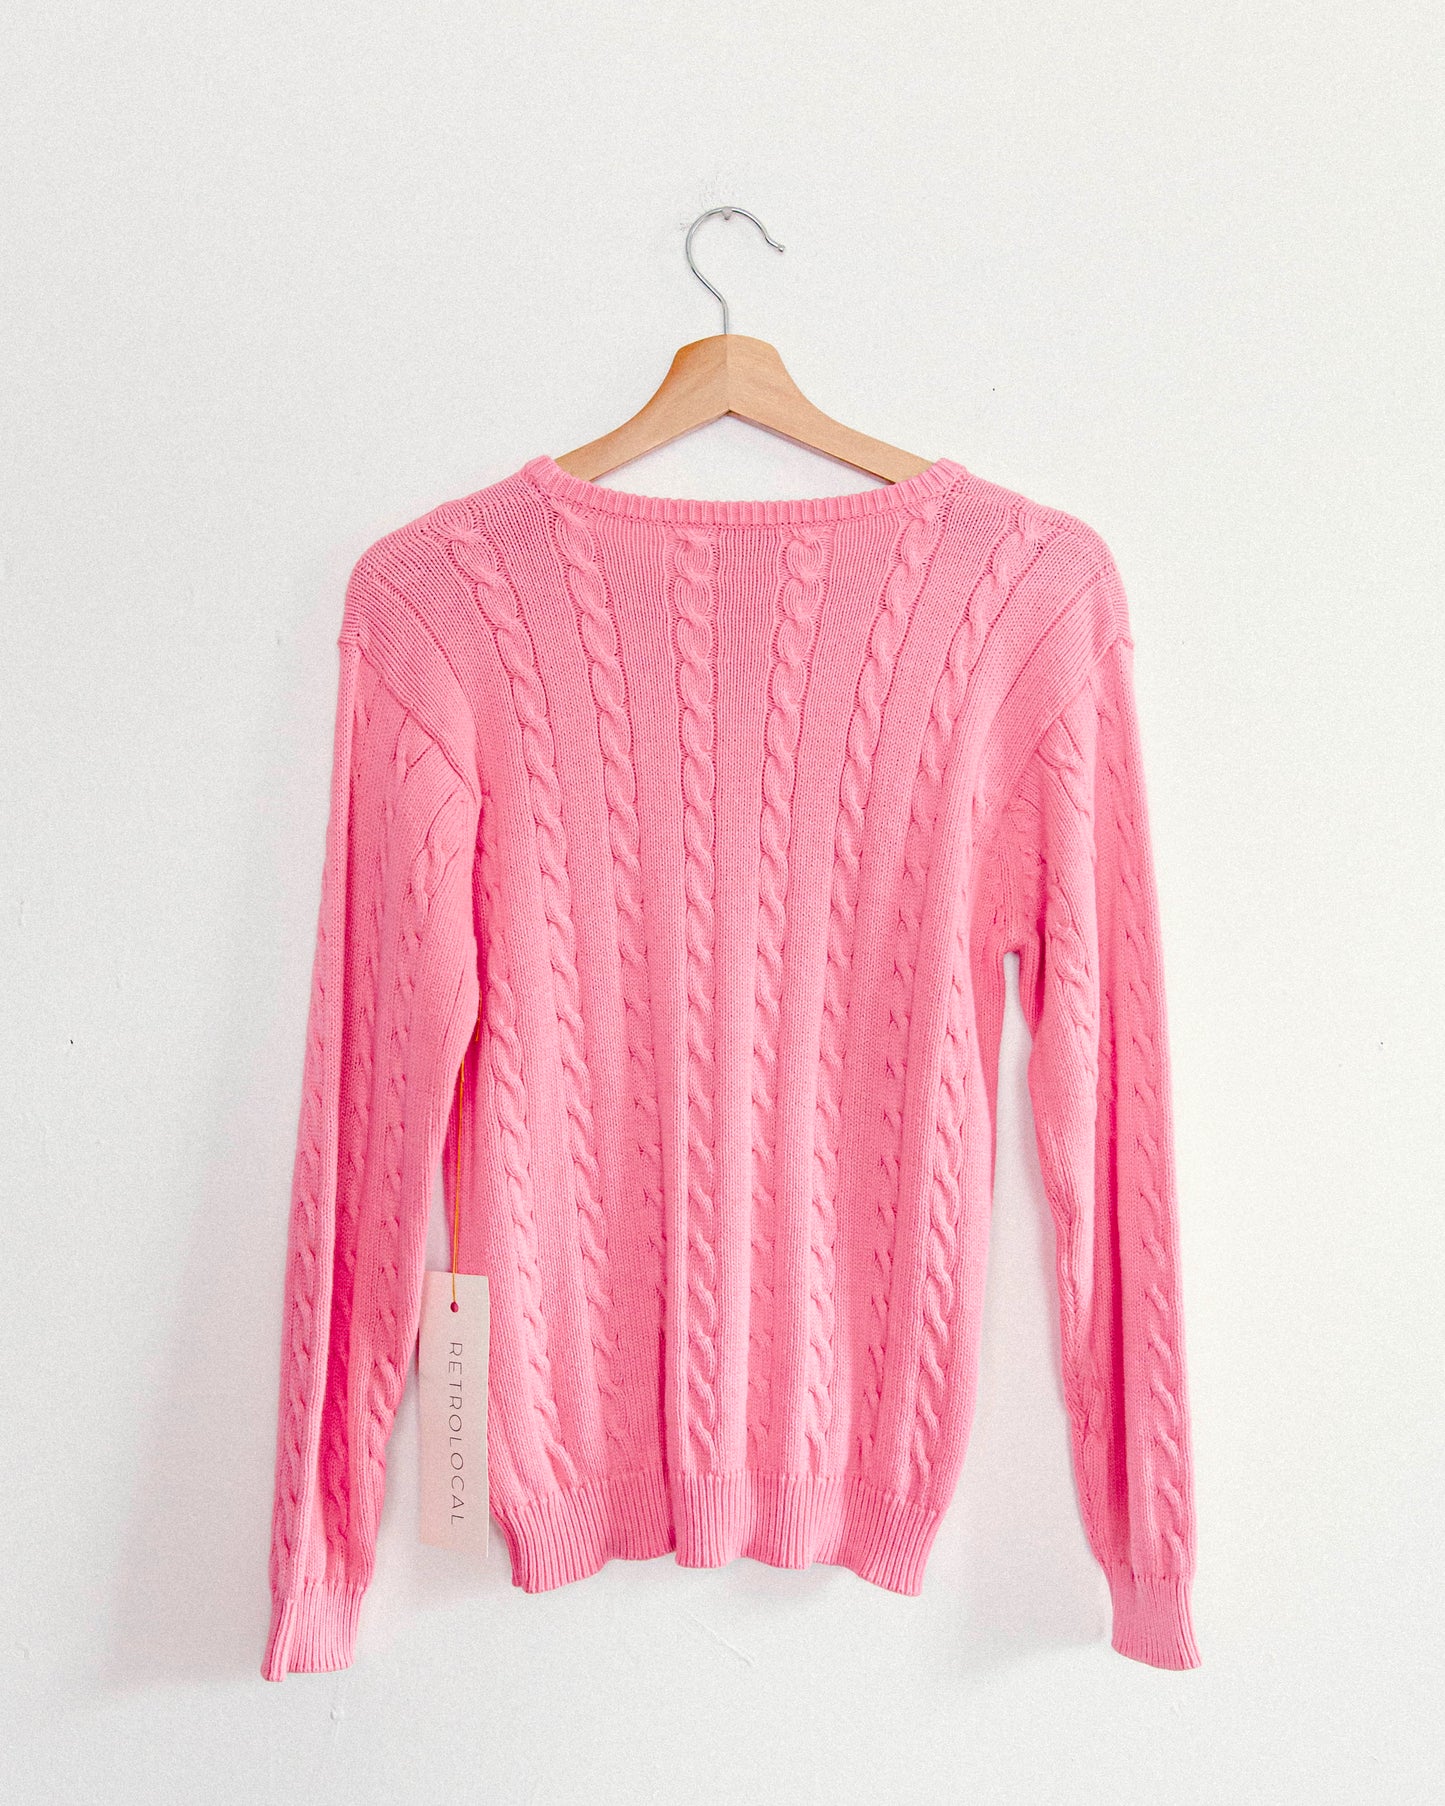 Flamingo Sweater